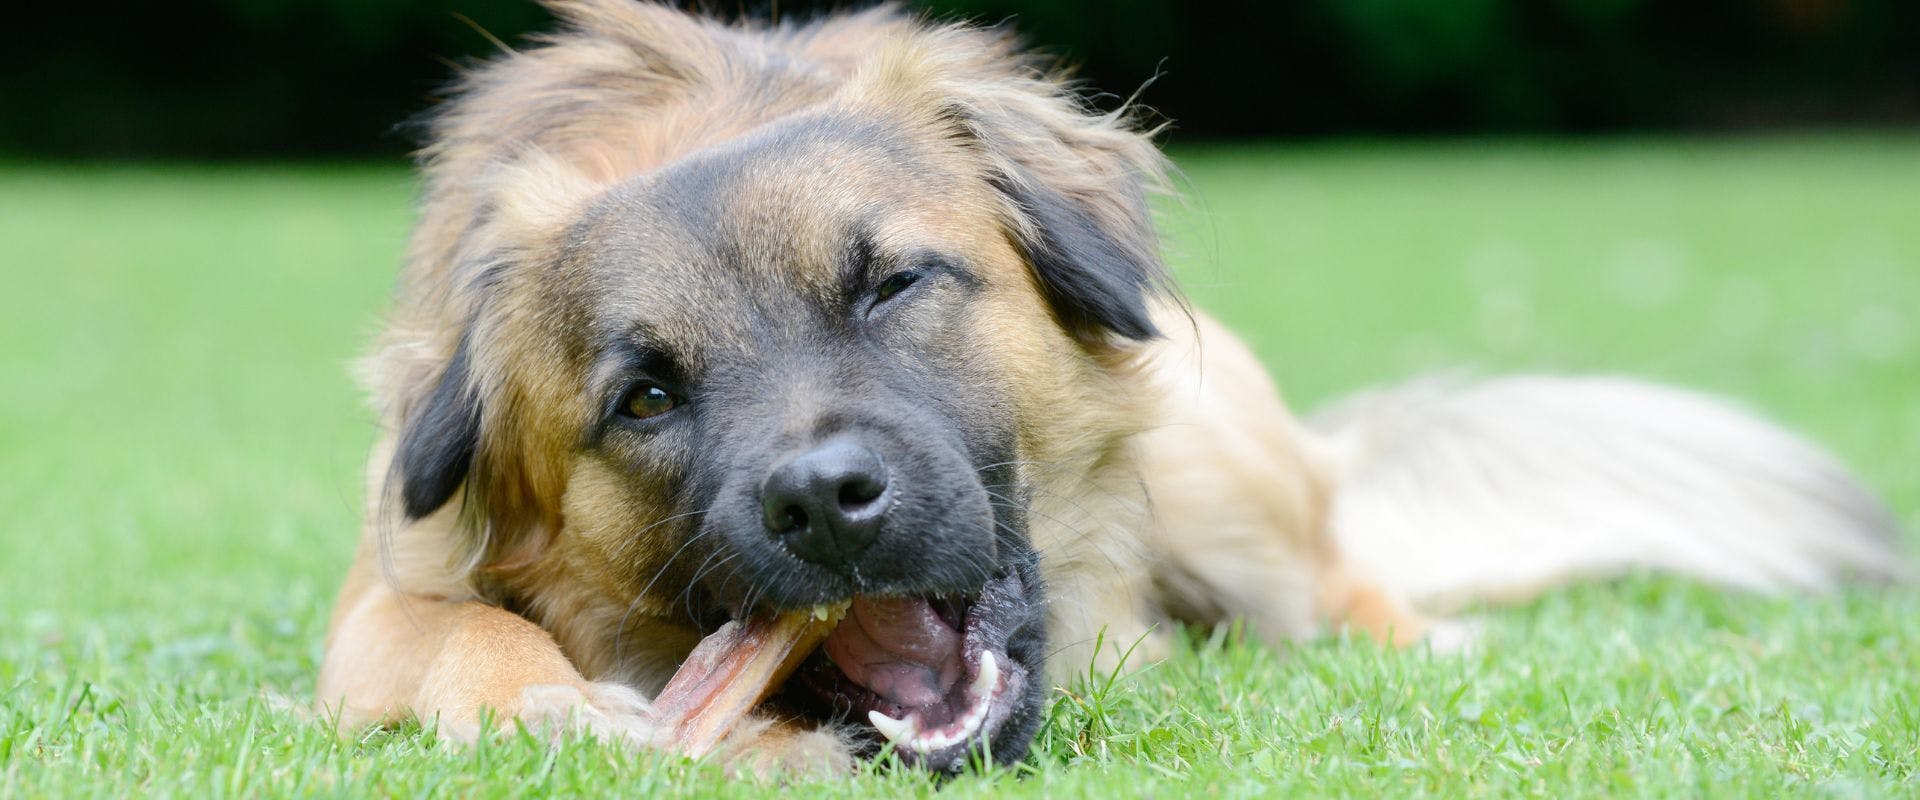 Dog eating a bone on grass outside